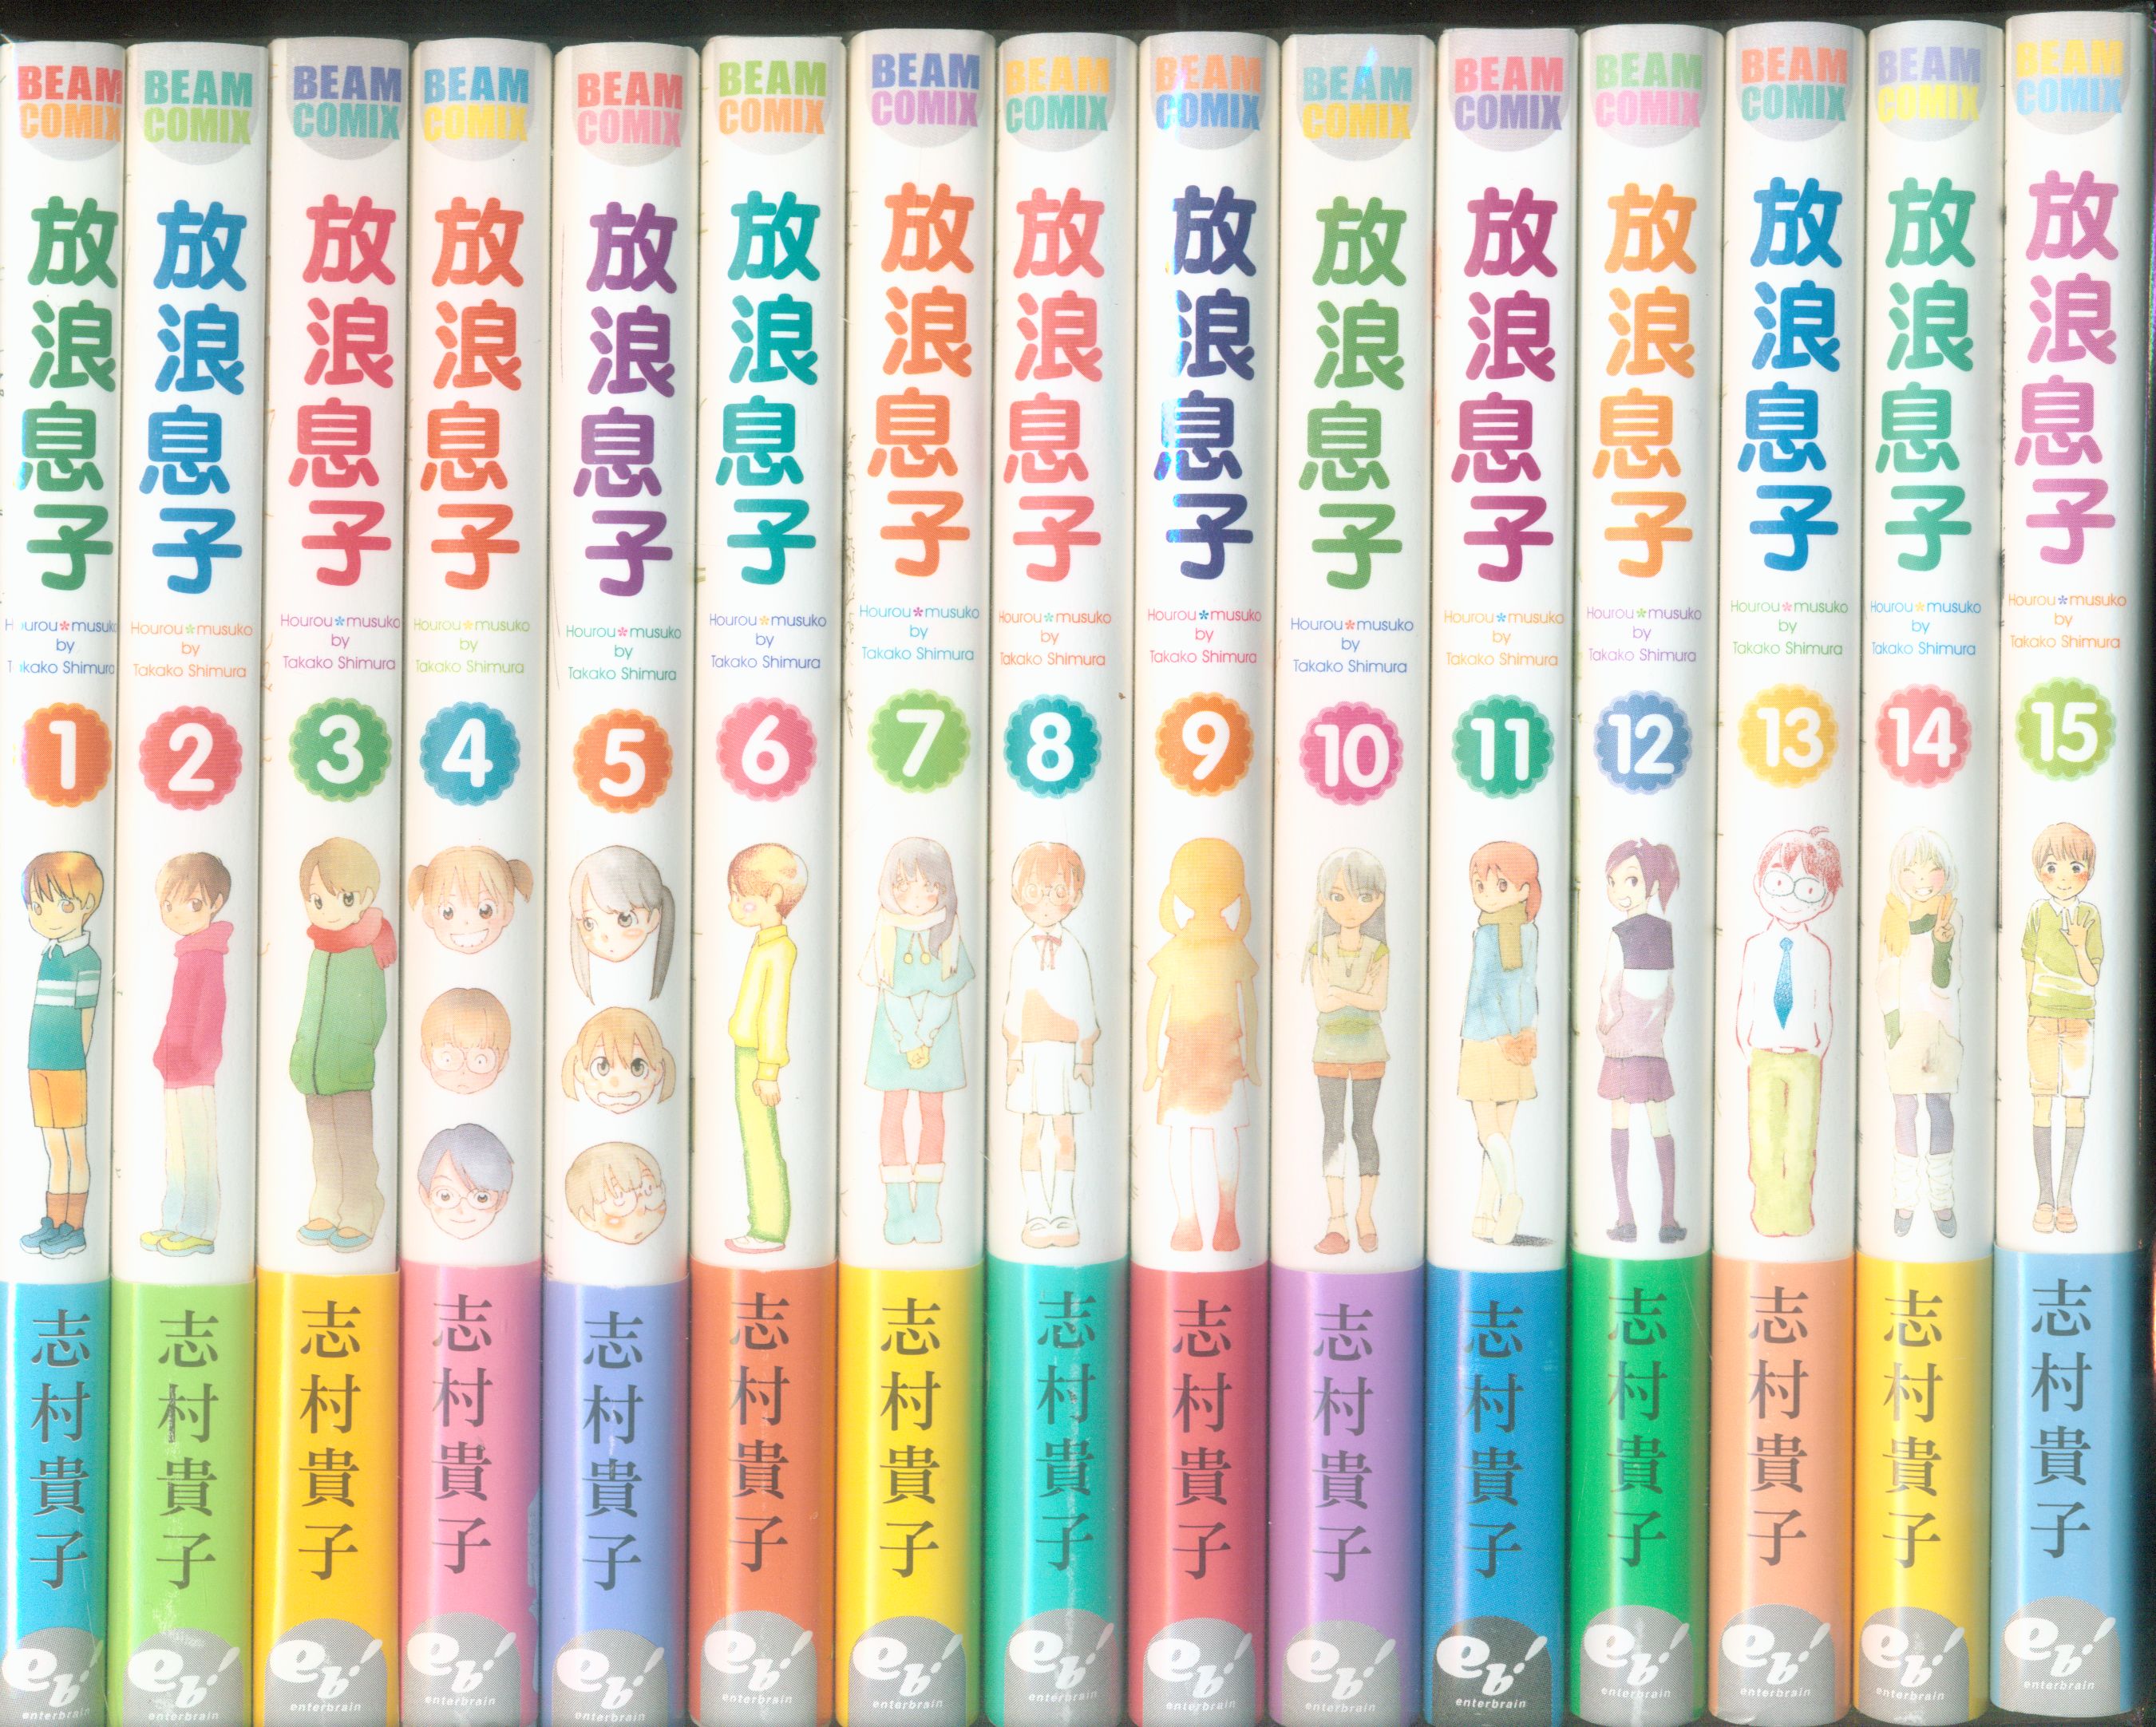 Enterbrain Beam Comics Takako Shimura Wandering Son Hourou Musuko Complete 15 Volume Set